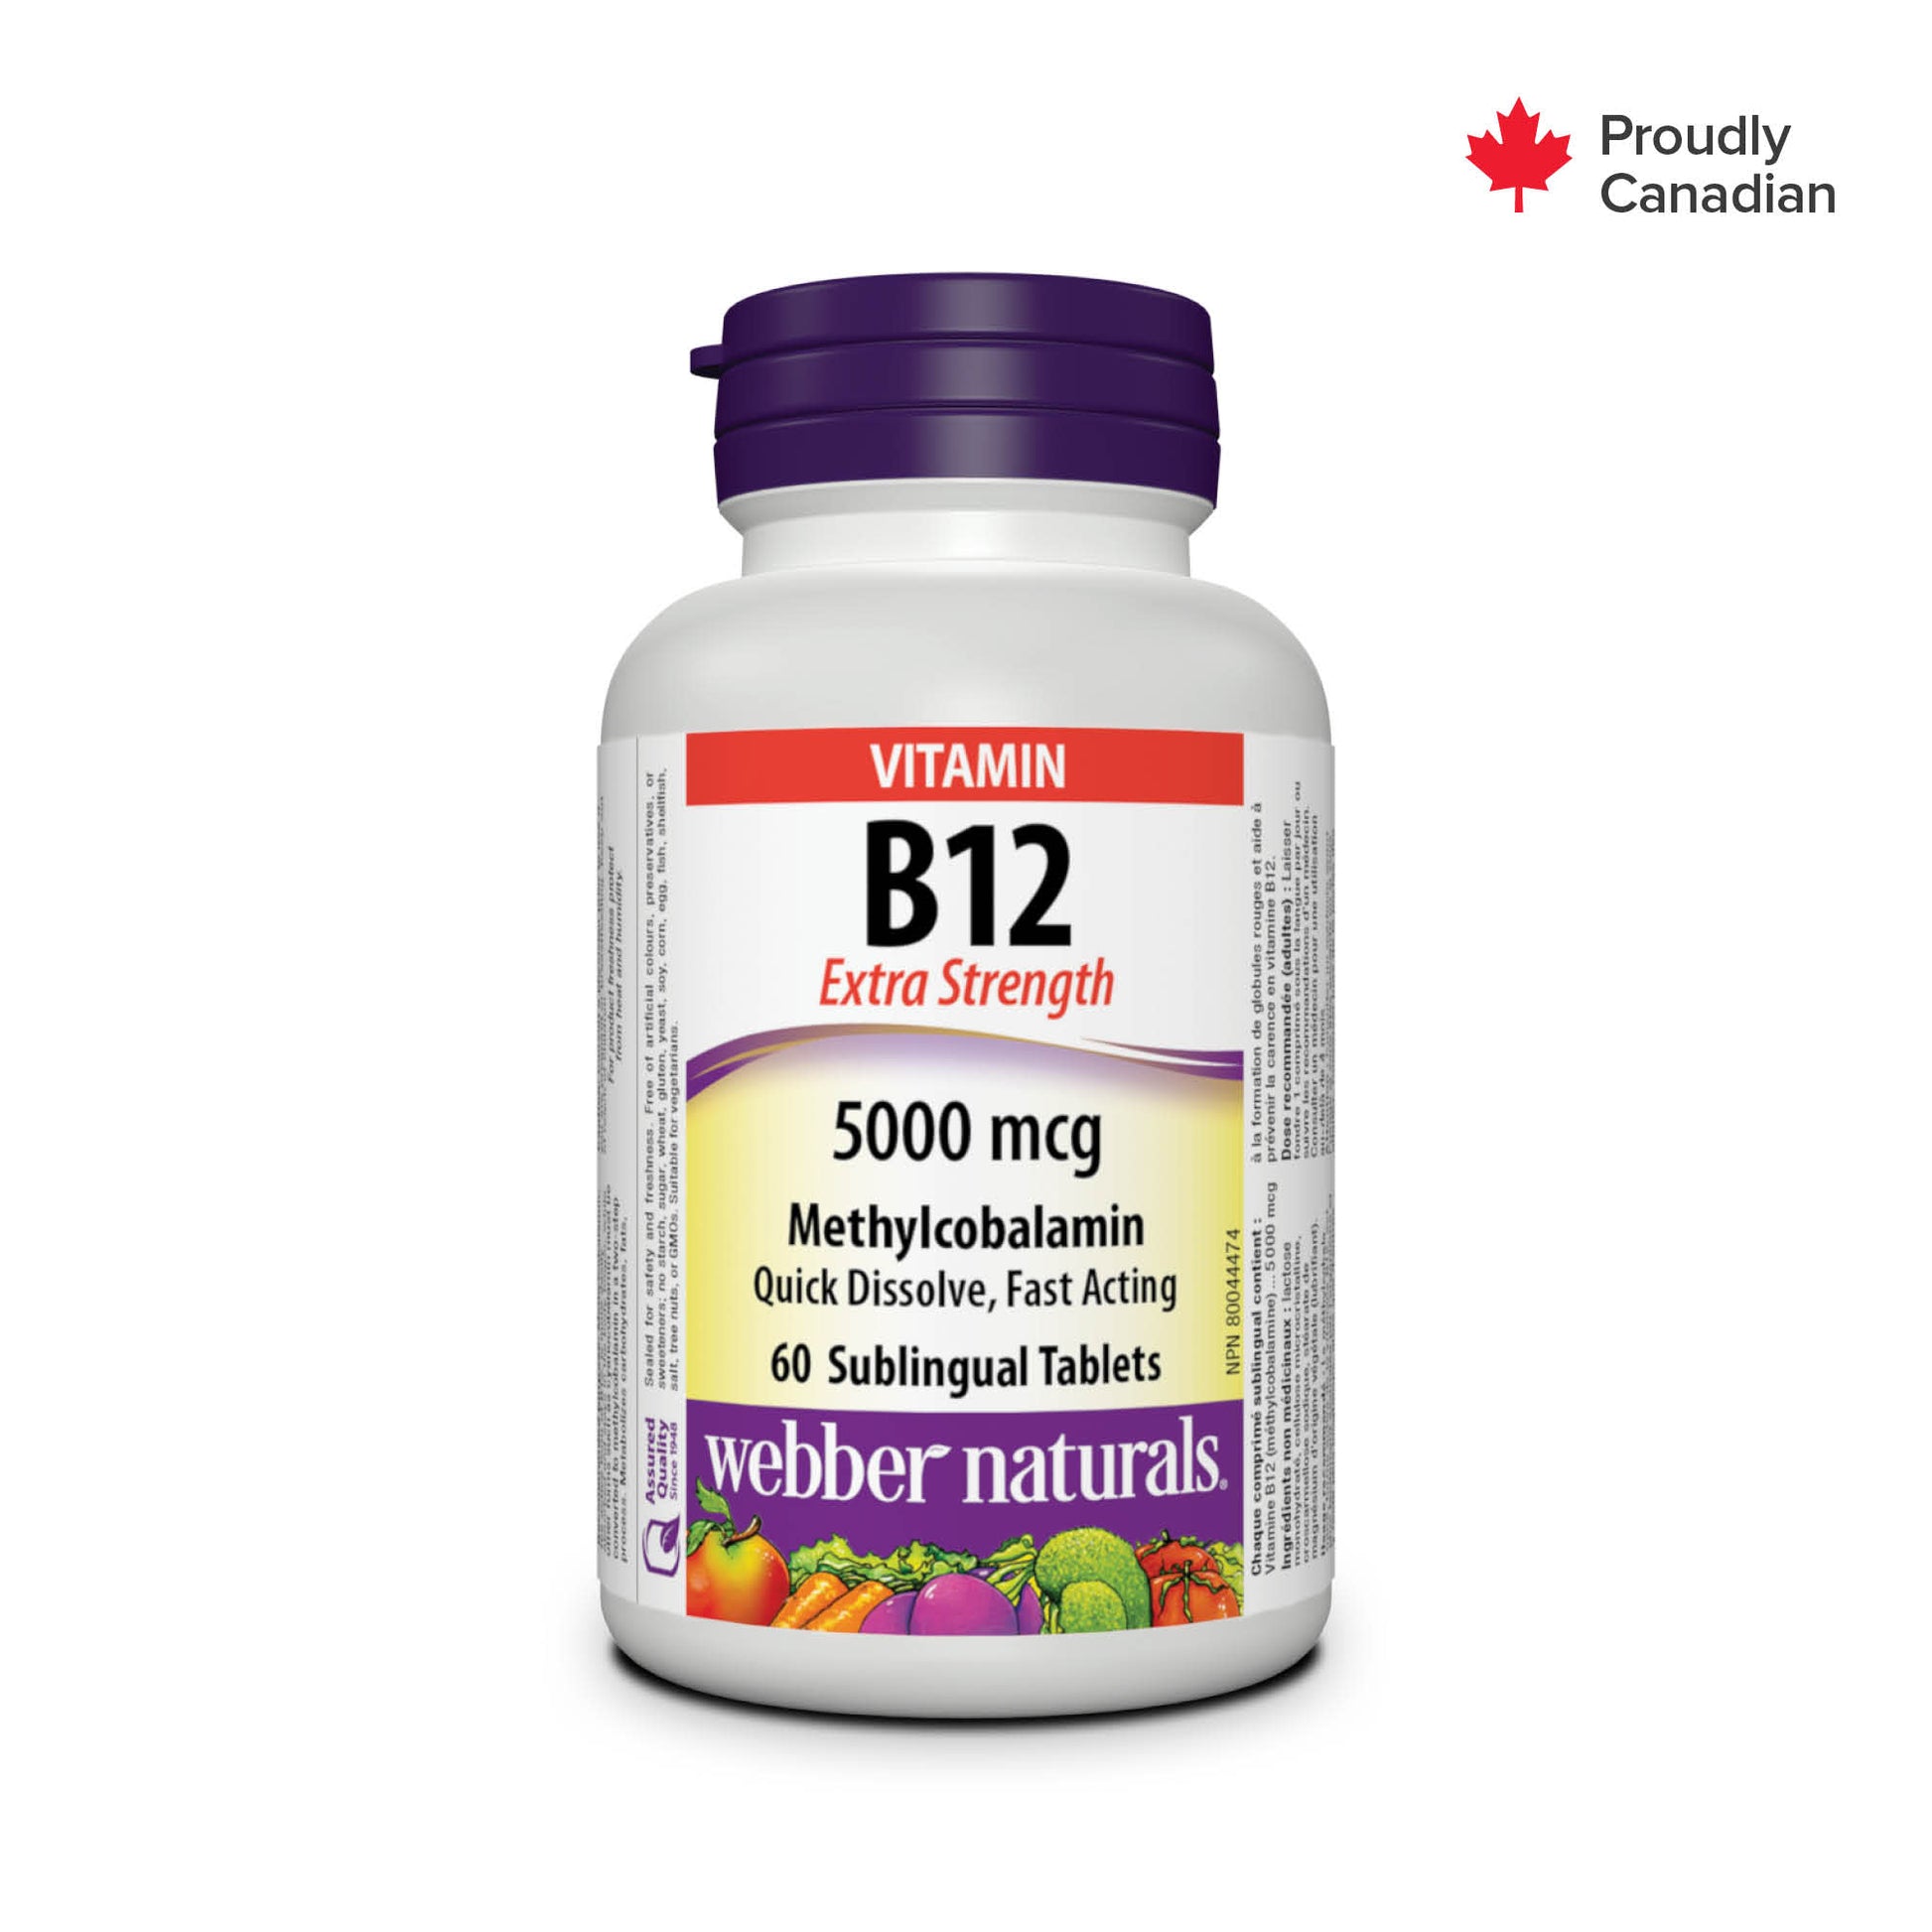 Vitamin B12 Extra Strength Methylcobalamin 5000 mcg for Webber Naturals|v|hi-res|WN3175